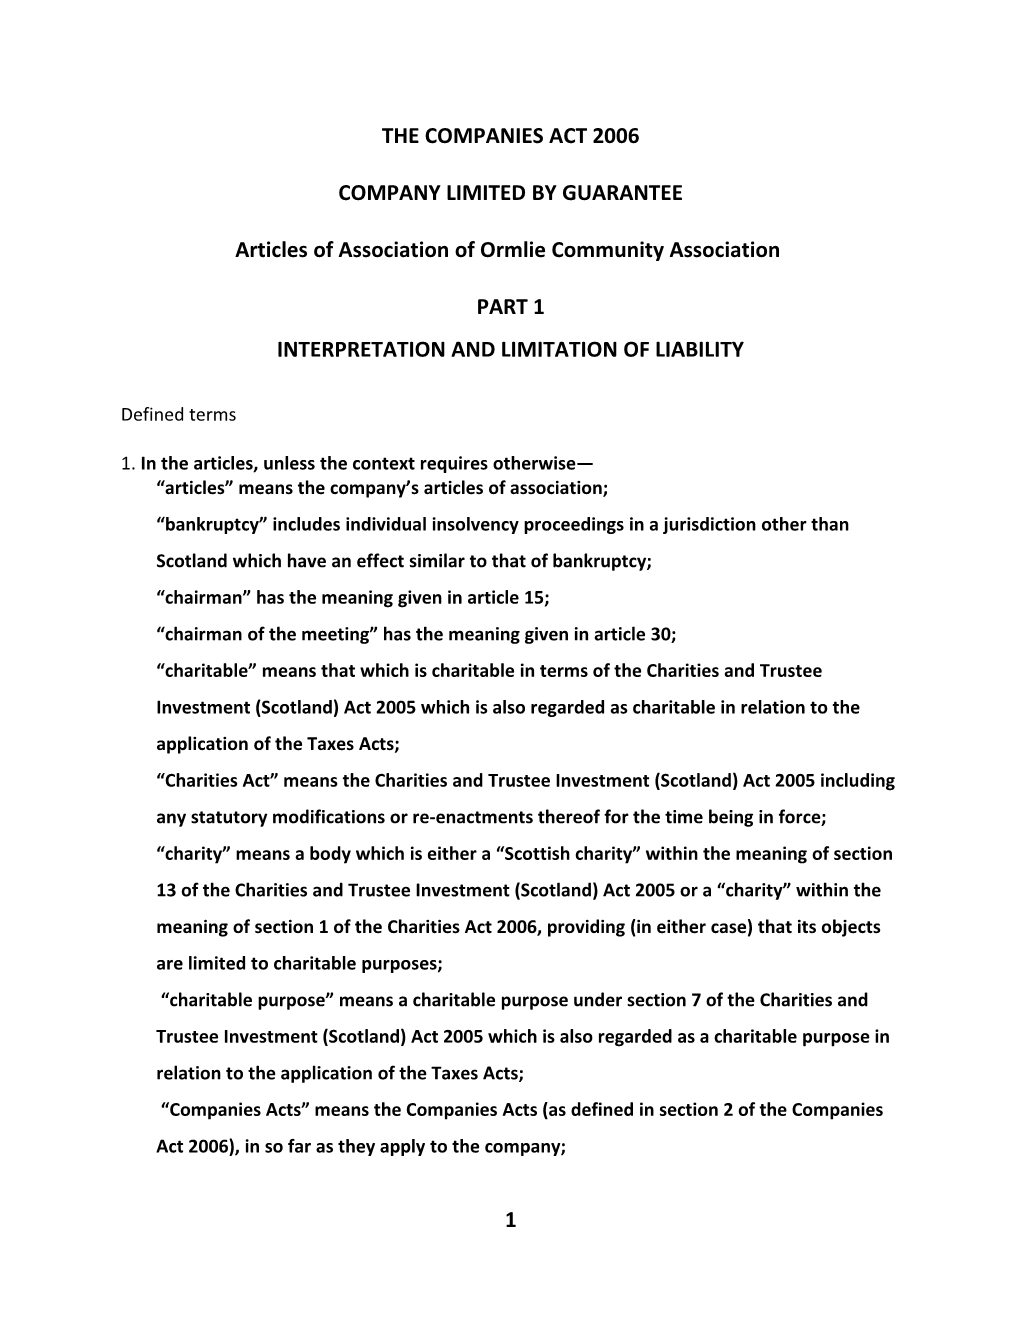 Articles of Association of Ormlie Community Association